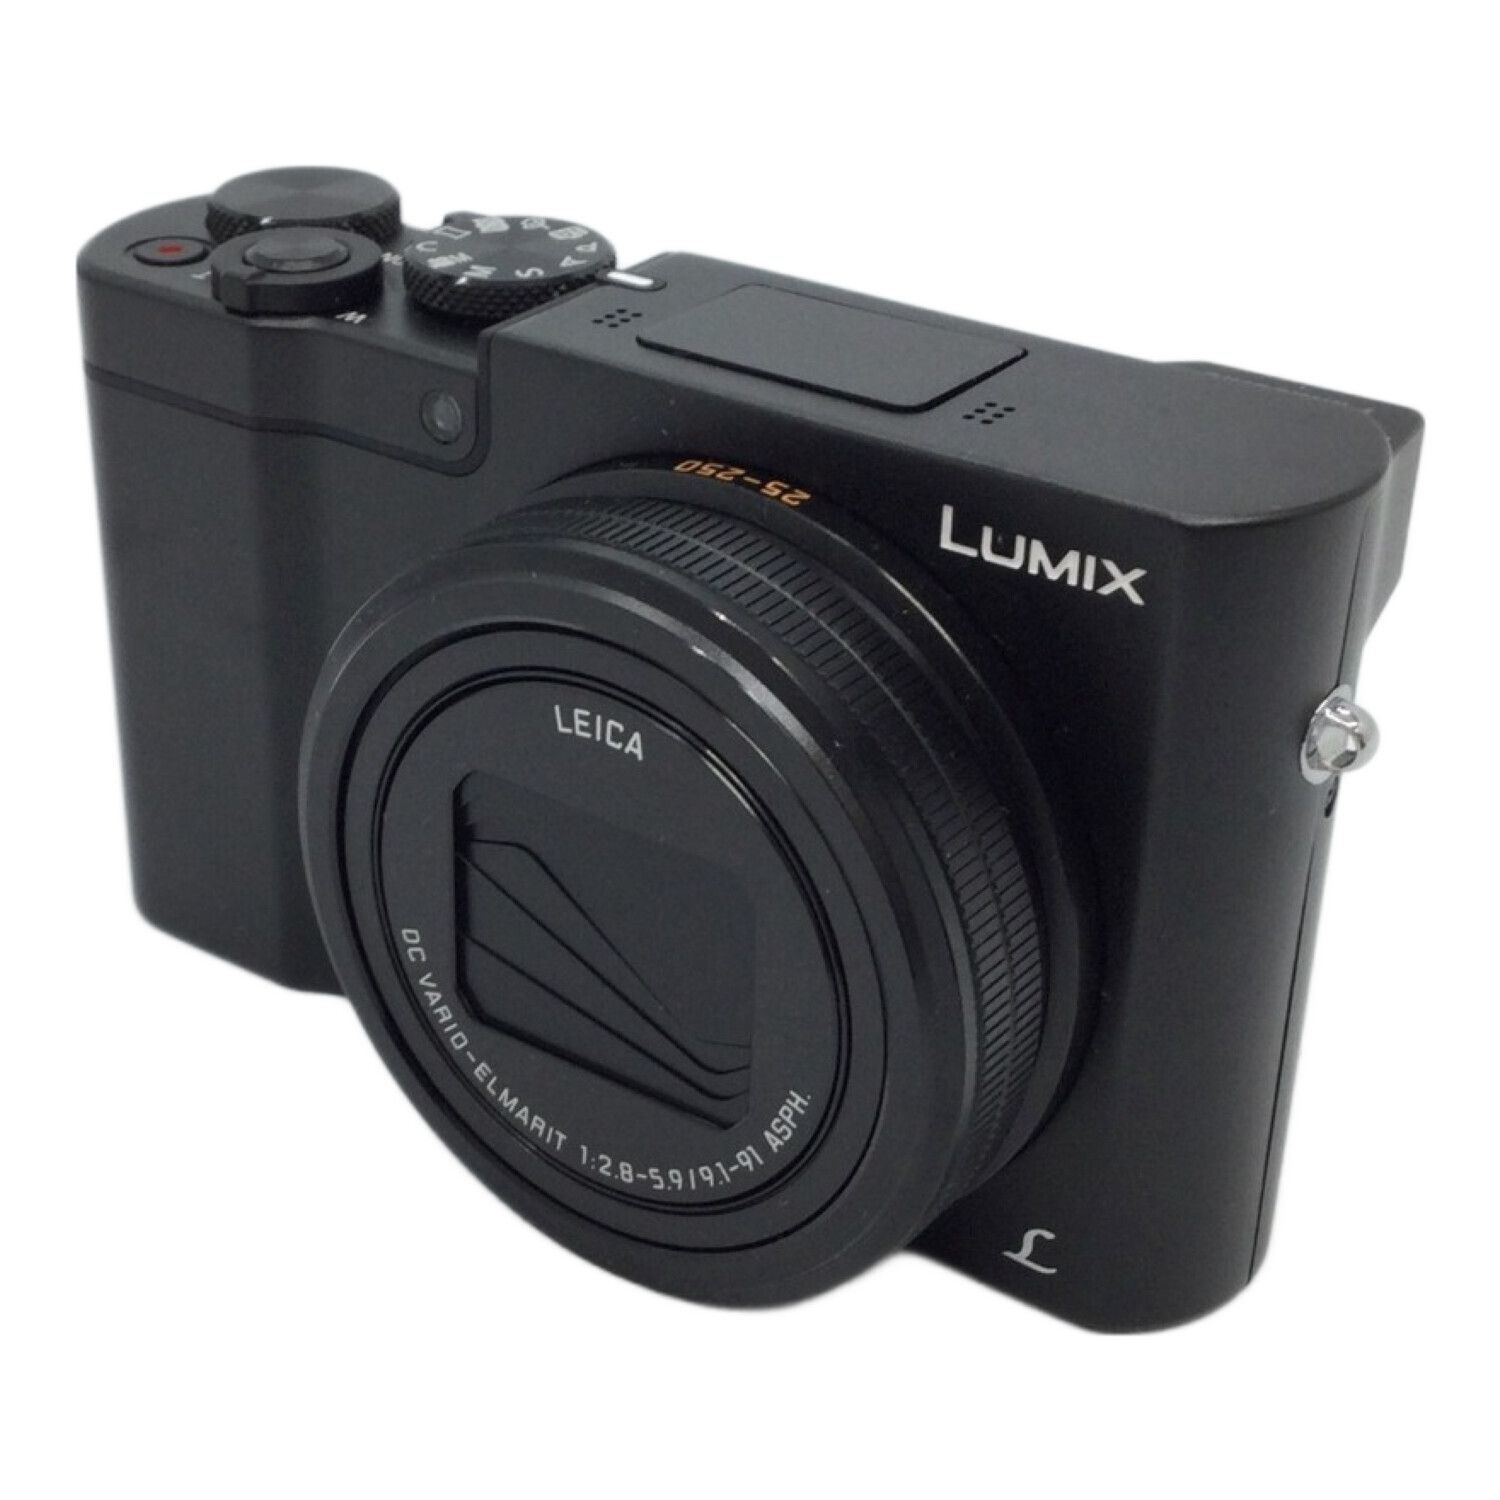 Panasonic (パナソニック) コンパクトデジタルカメラ LUMIX DMC-TX1 2010万画素(有効画素) 専用電池 SDXCカード対応  WQ9KB004735｜トレファクONLINE